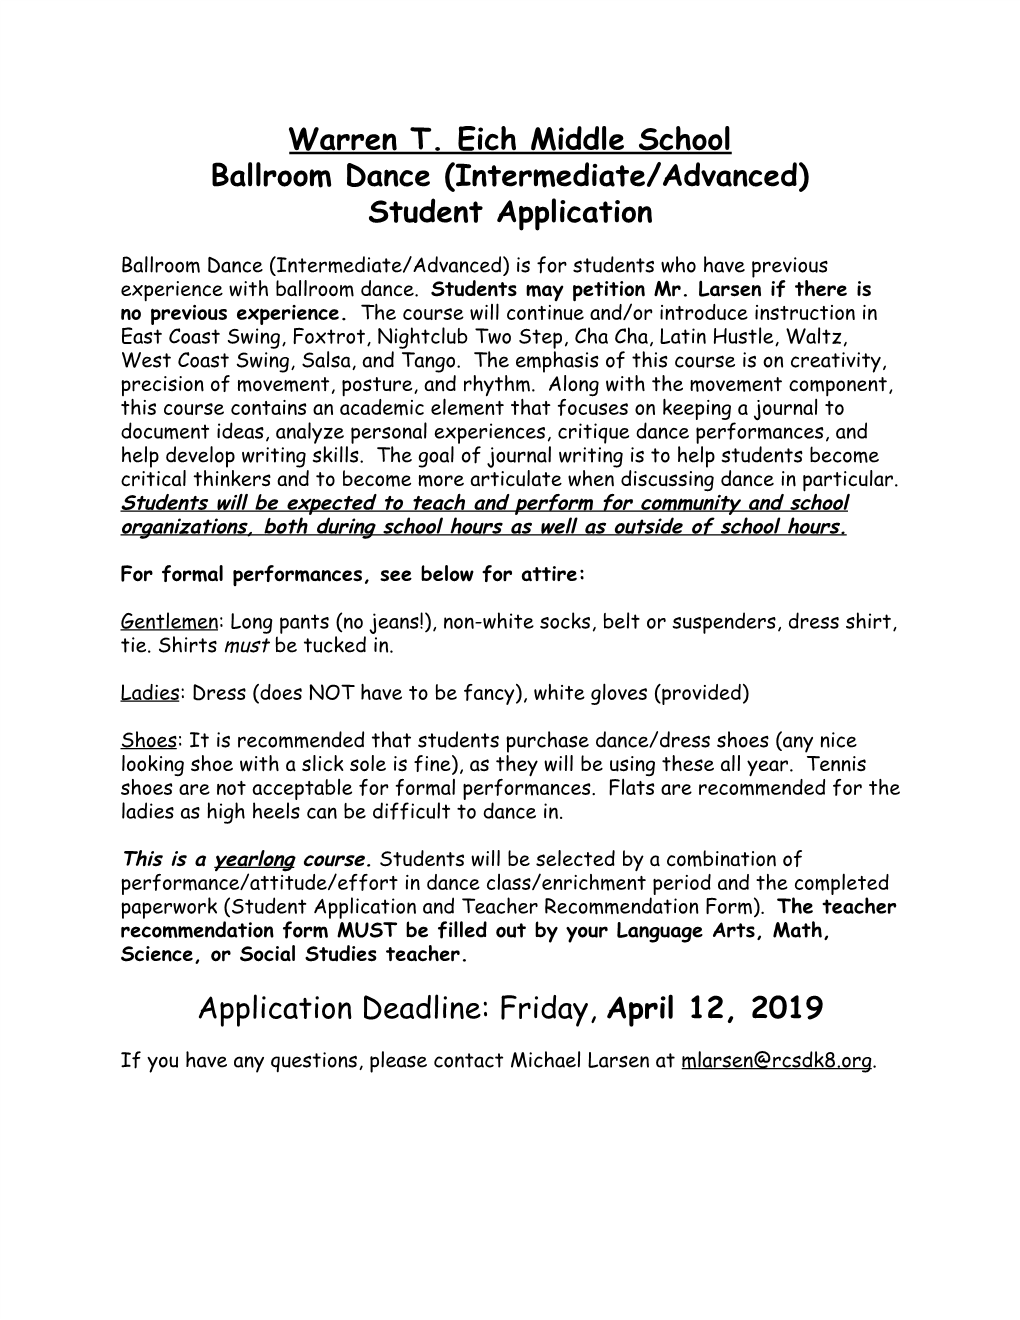 Warren T. Eich Middle School Ballroom Dance (Intermediate/Advanced) Student Application